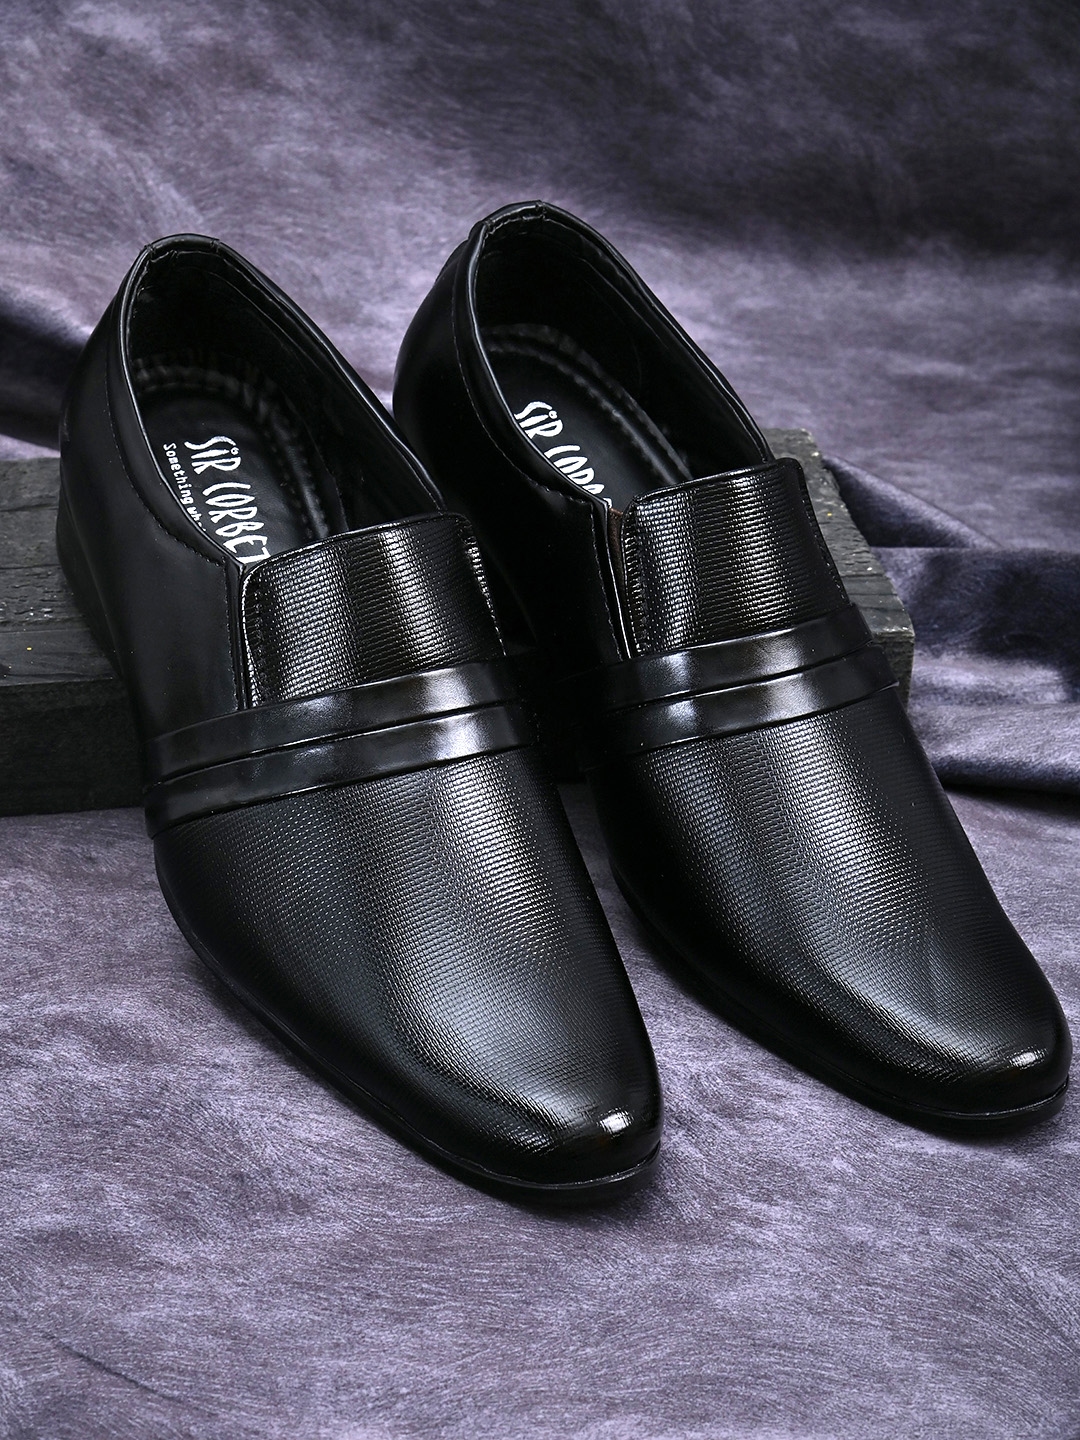 Buy HiREL'S Men's Black Shoes-6 UK/India (39 EU) (hirel750) at Amazon.in